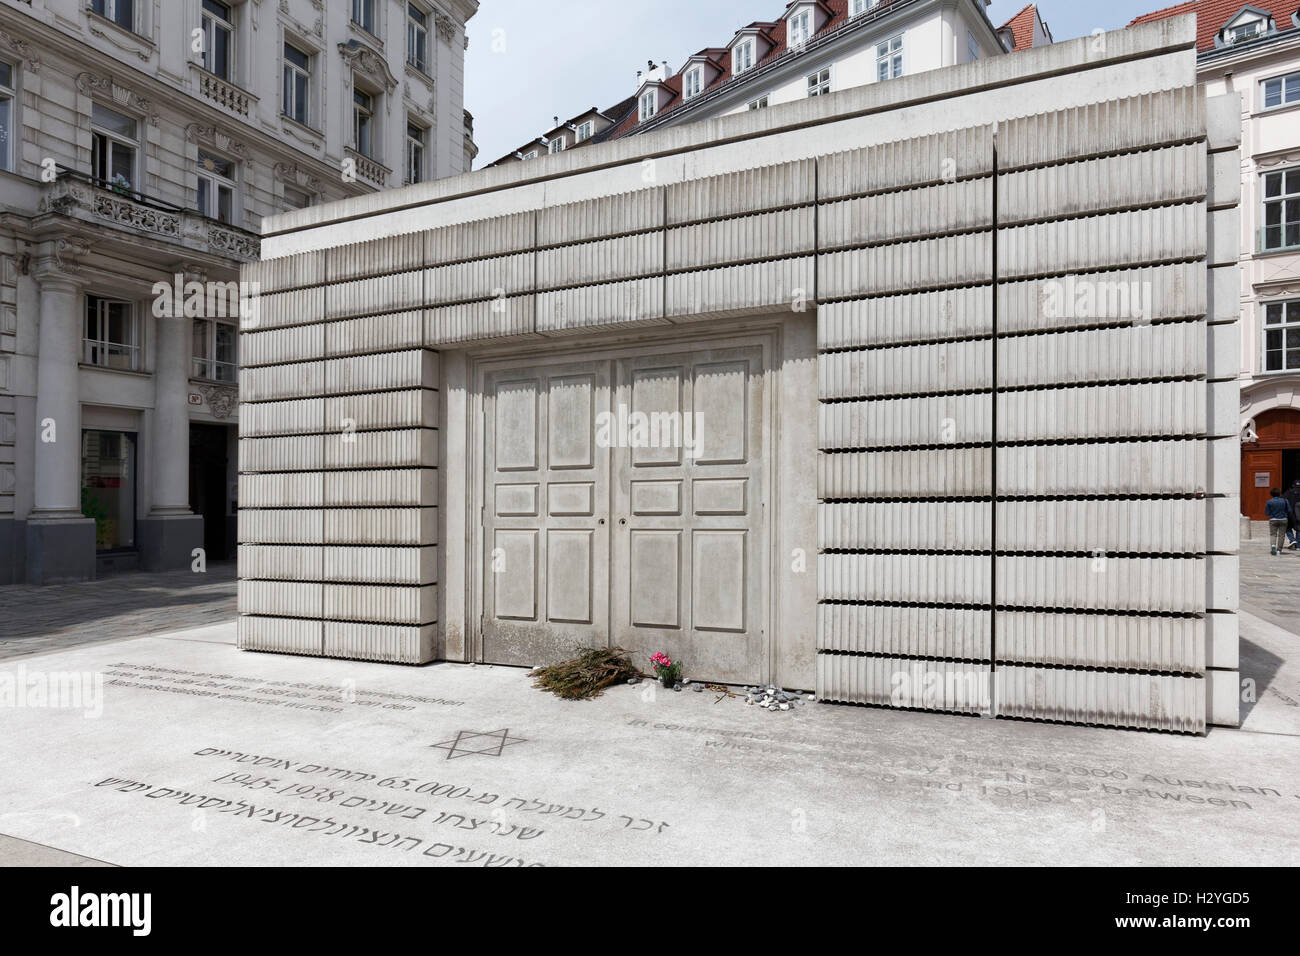 Memorial for the Austrian Jewish victims of the Shoah, by Rachel Whiteread, Judenplatz, Vienna, Austria Stock Photo